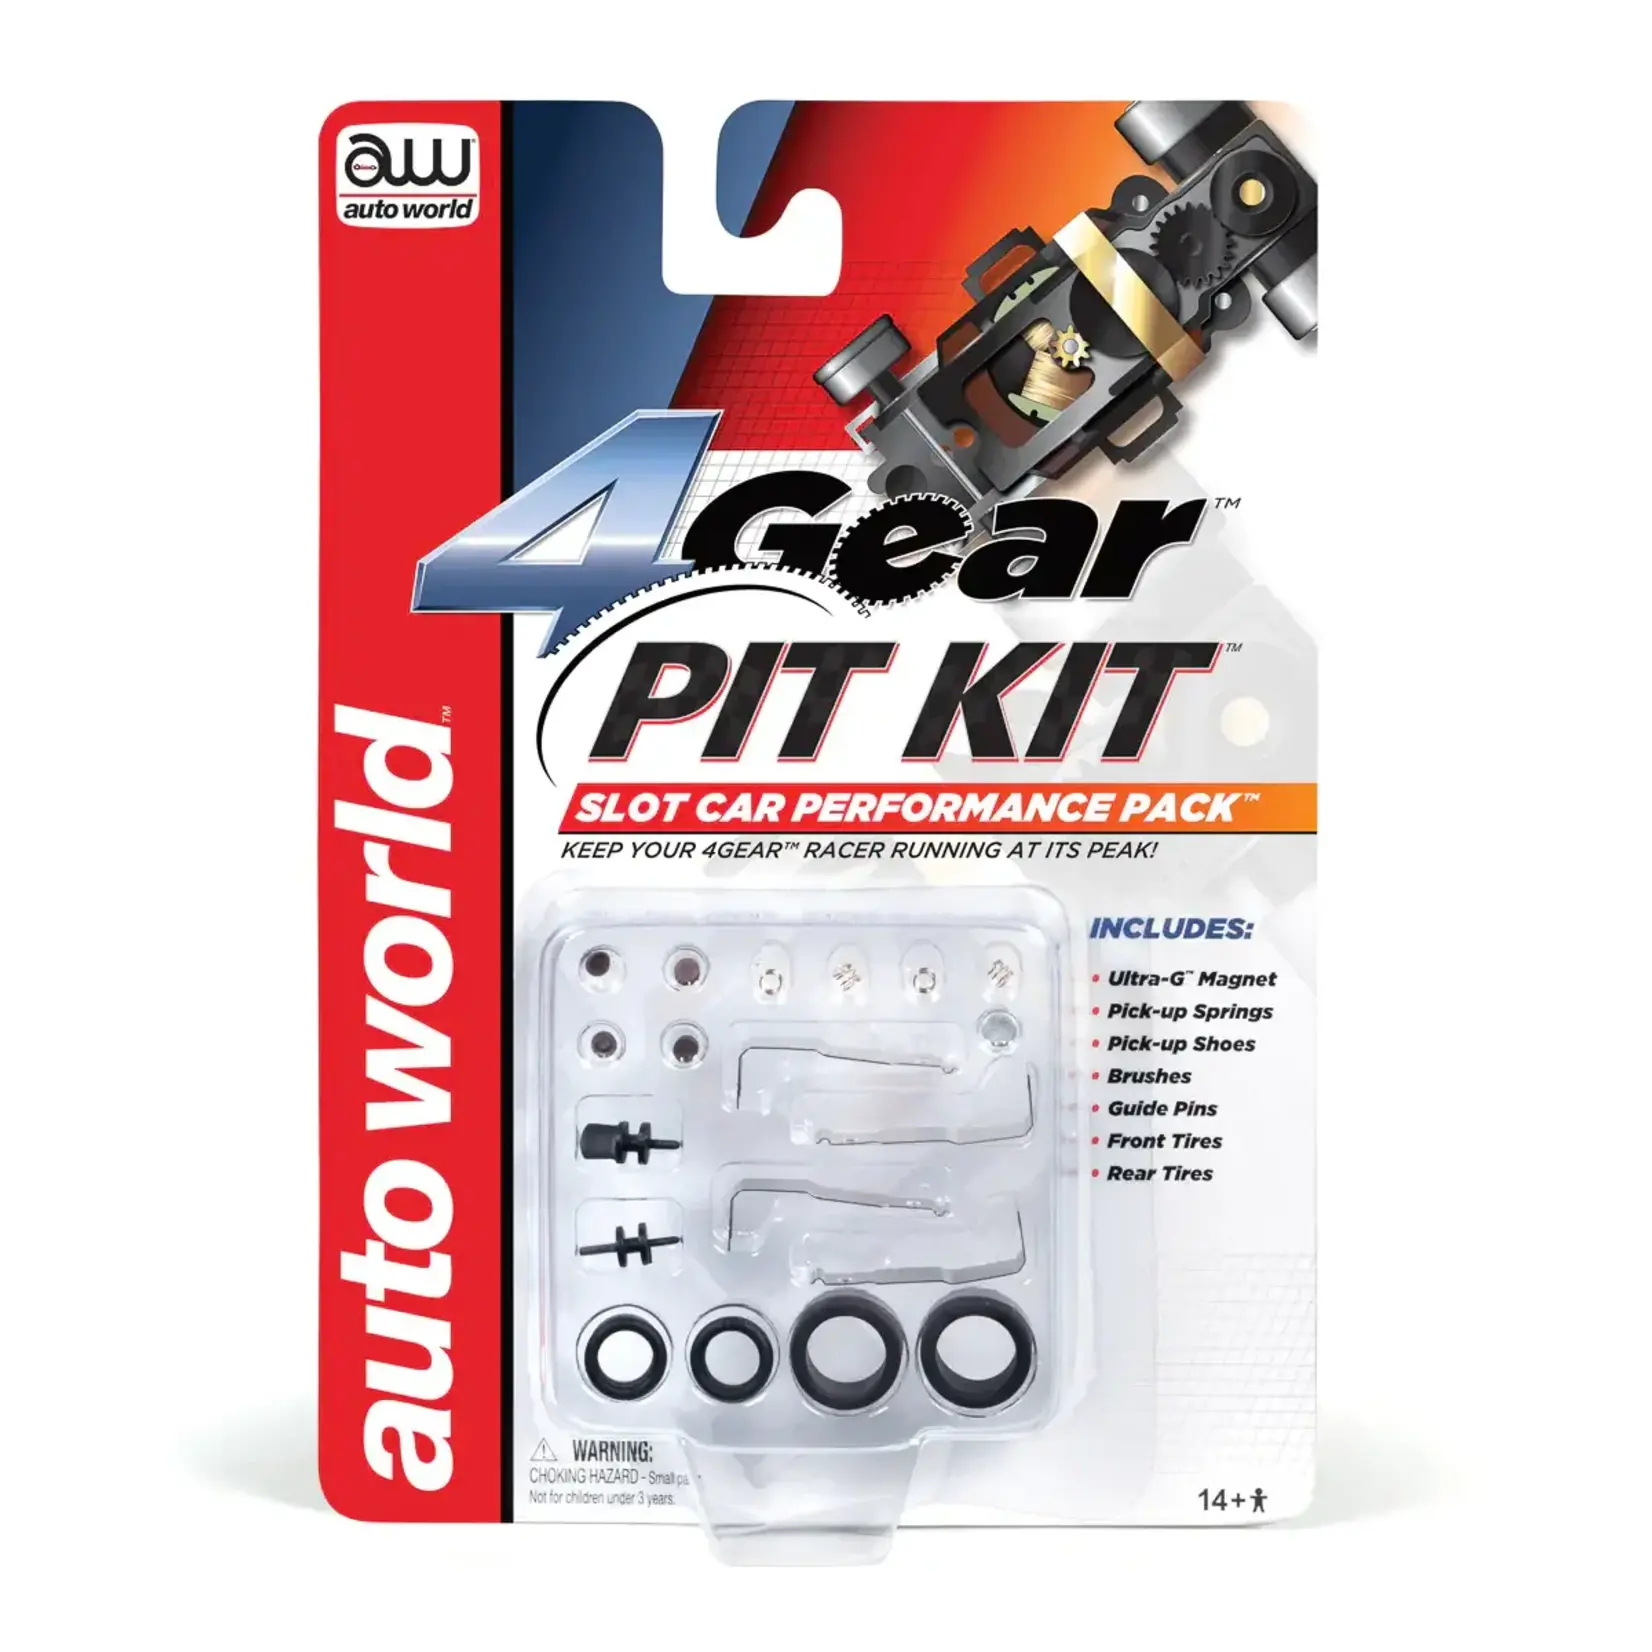 Auto World AW00230 Auto World 4 Gear Pit Kit